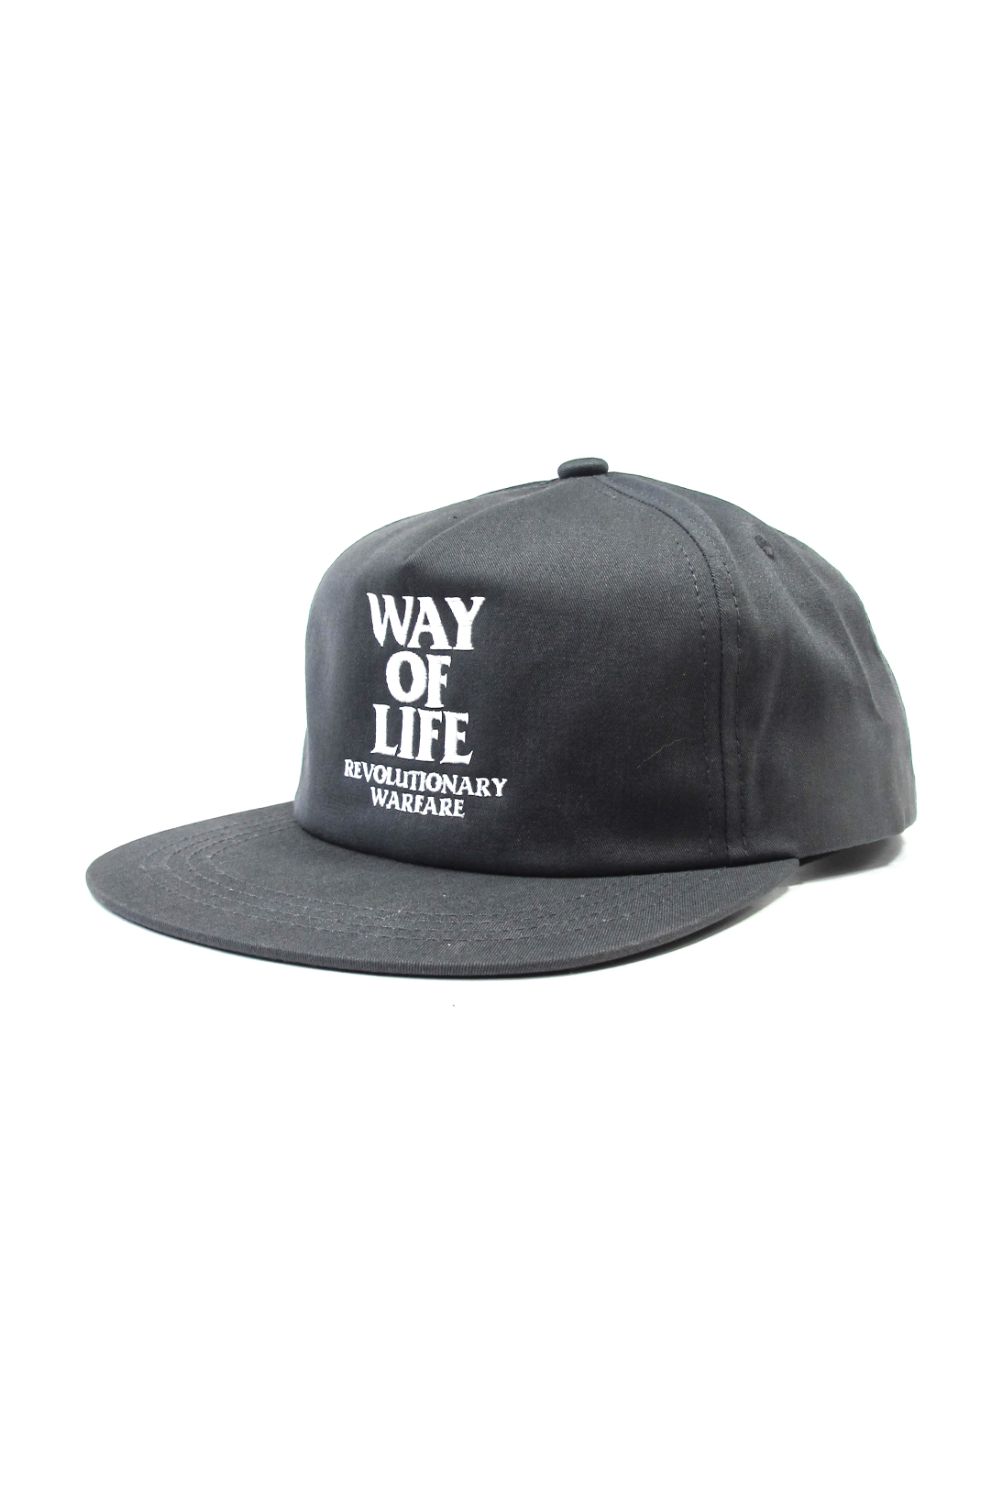 RATS EMBROIDERY CAP "WAY OF LIFE" BLACK